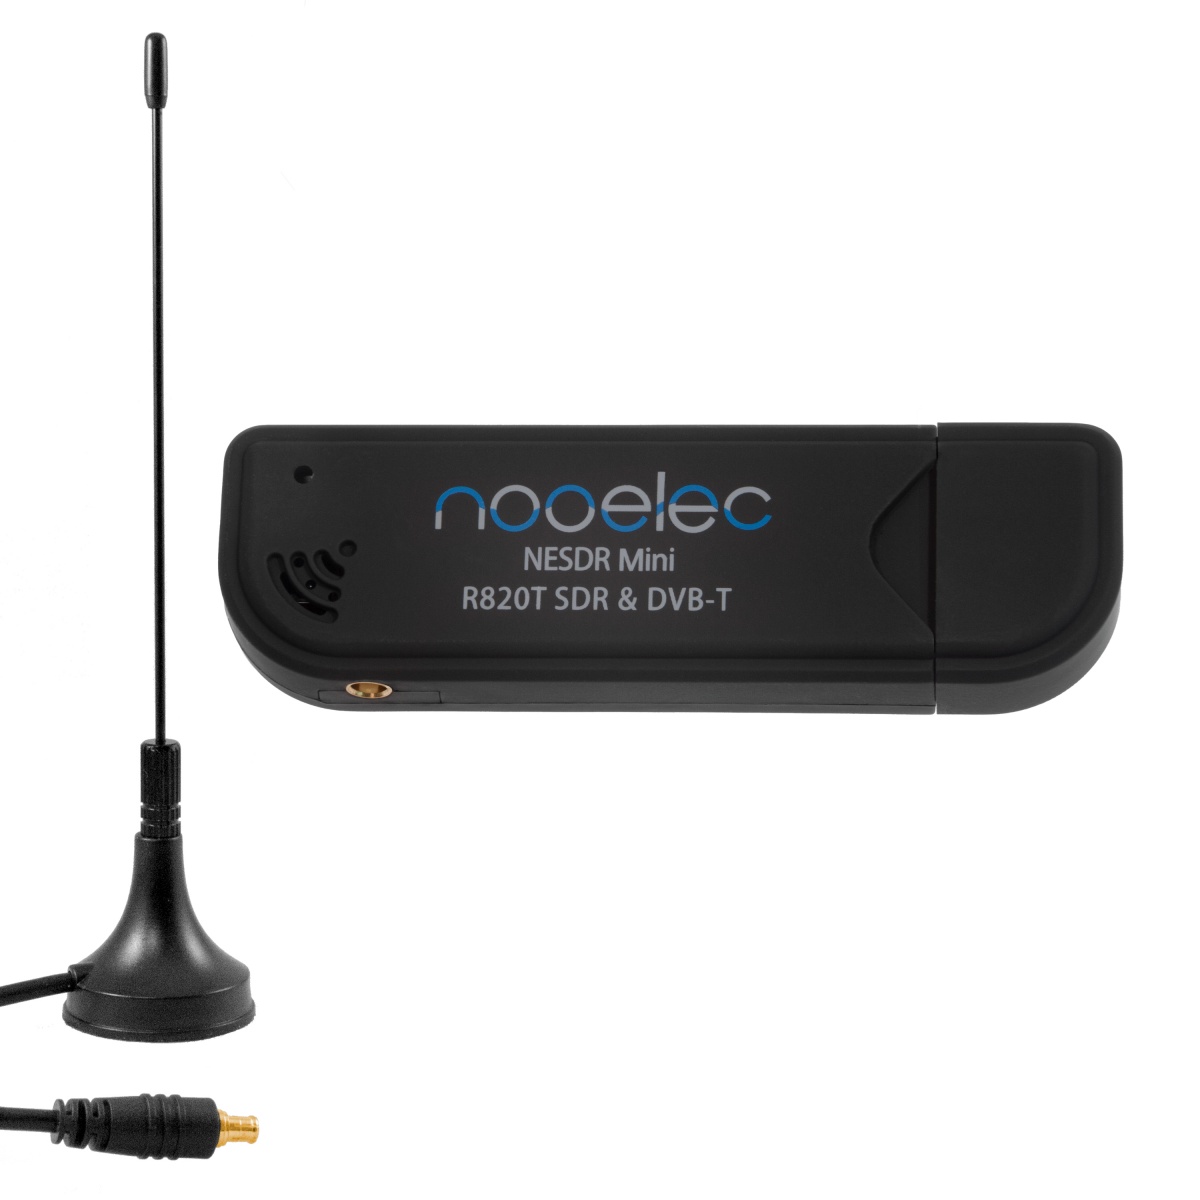 slogan undulate kapital Nooelec - Nooelec NESDR Mini SDR & DVB-T USB Stick (RTL2832 + R820T) w/  Antenna - SDR Receivers - Software Defined Radio